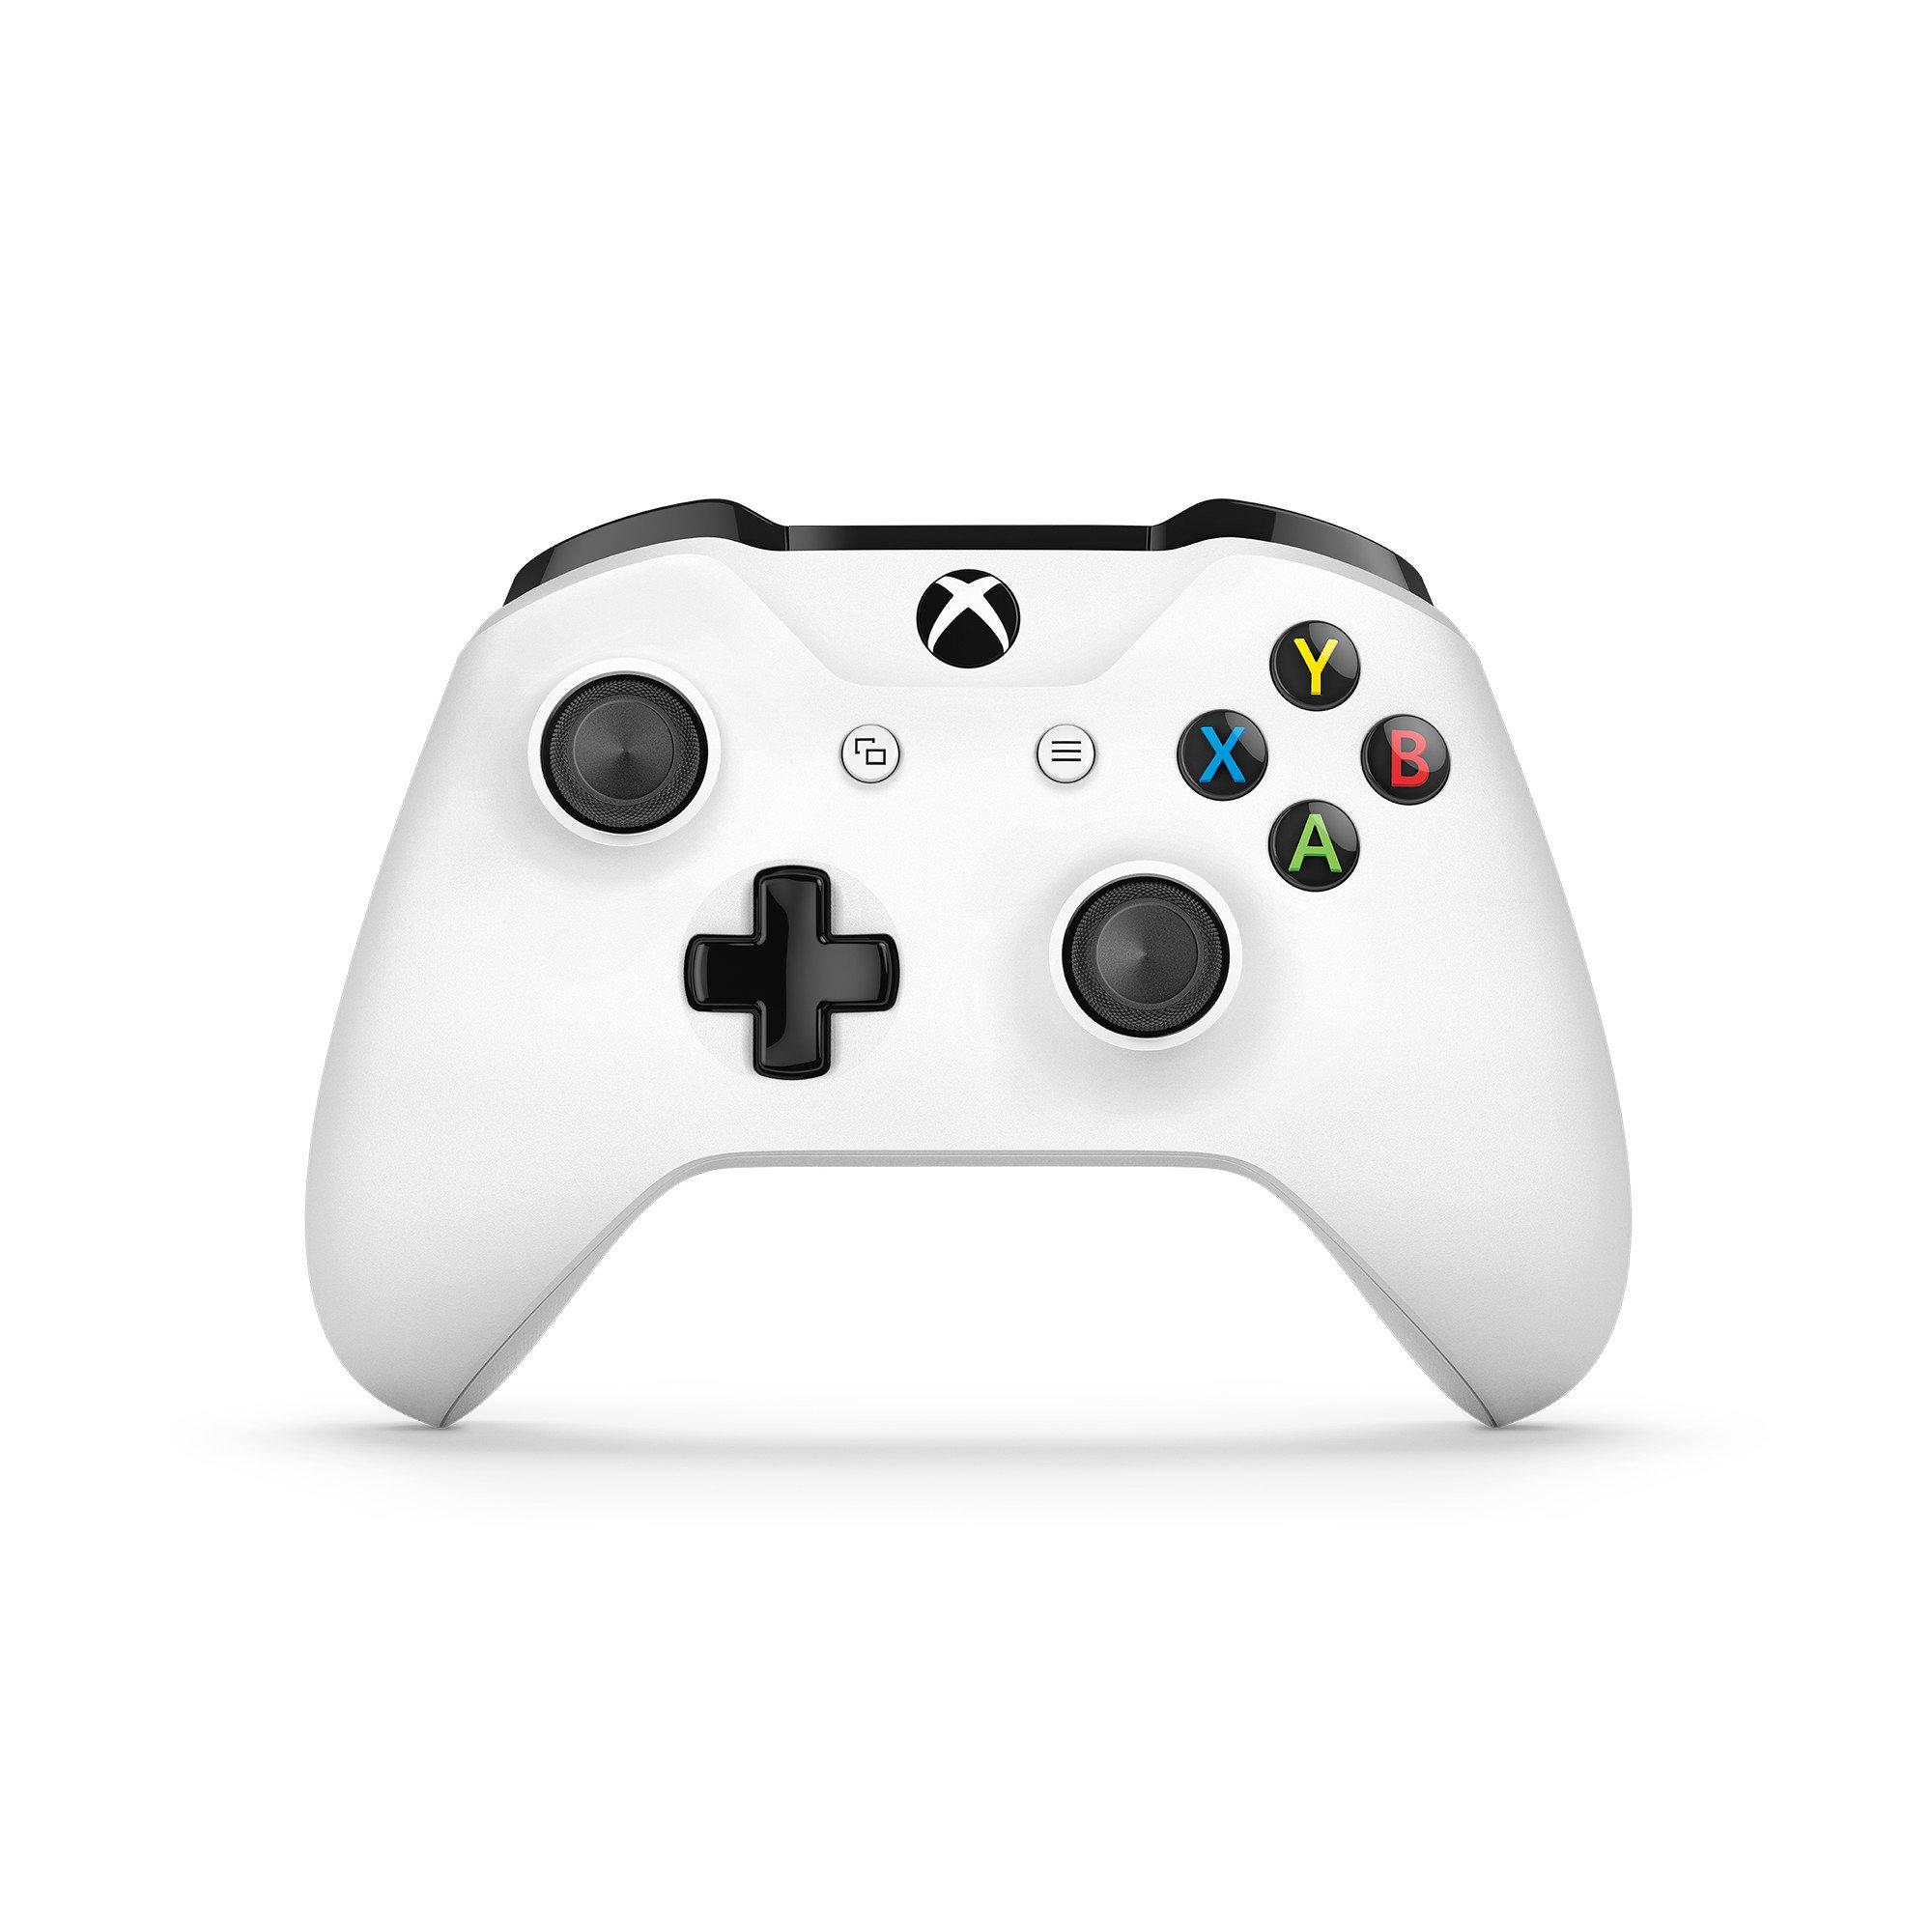 Bepalen Productie Hoogte Microsoft Xbox One Wireless Controller Midnight Forces | GameStop